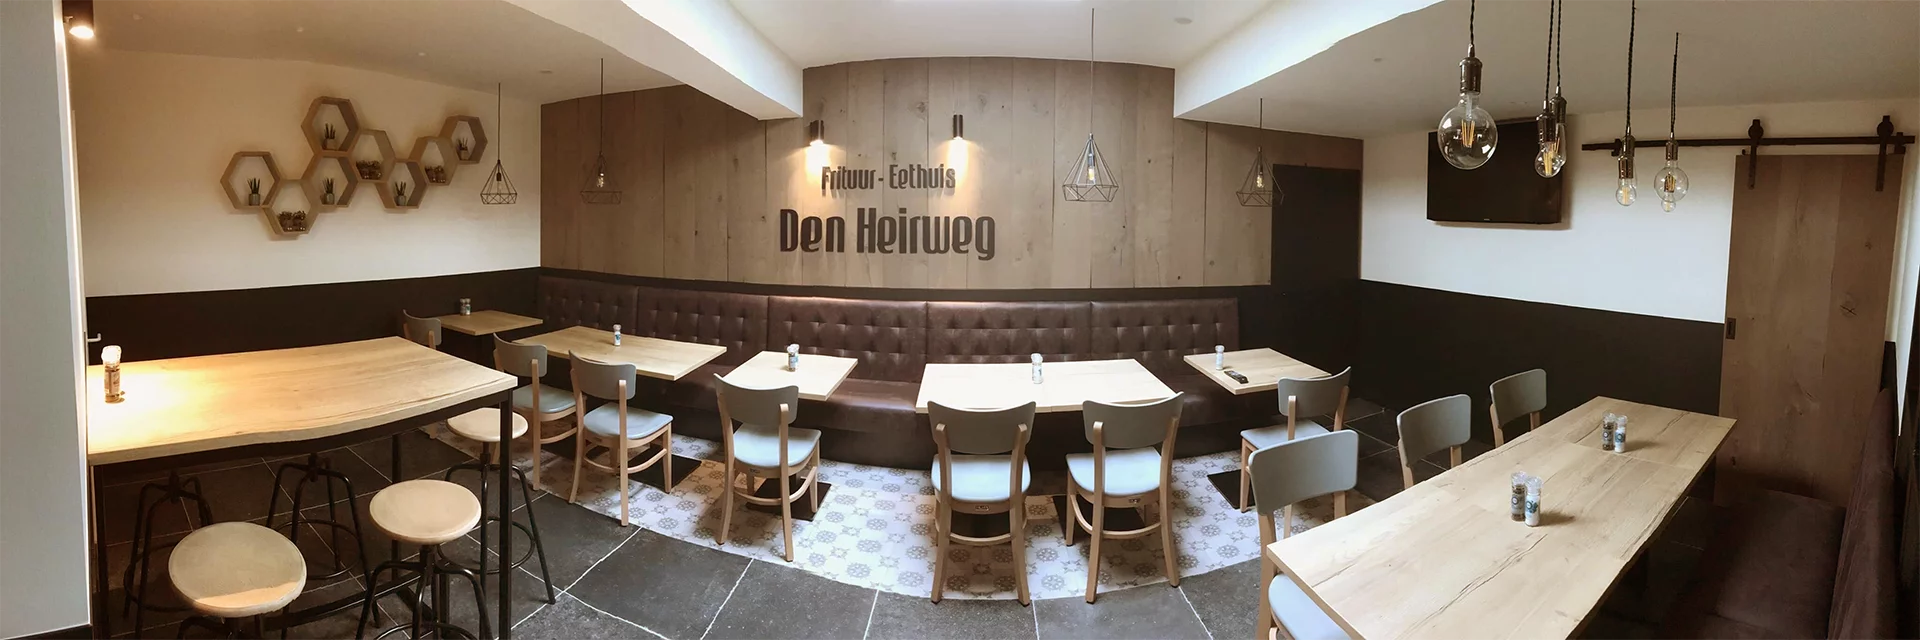 Interieur frituur-eethuis Den Heirweg in Anzegem